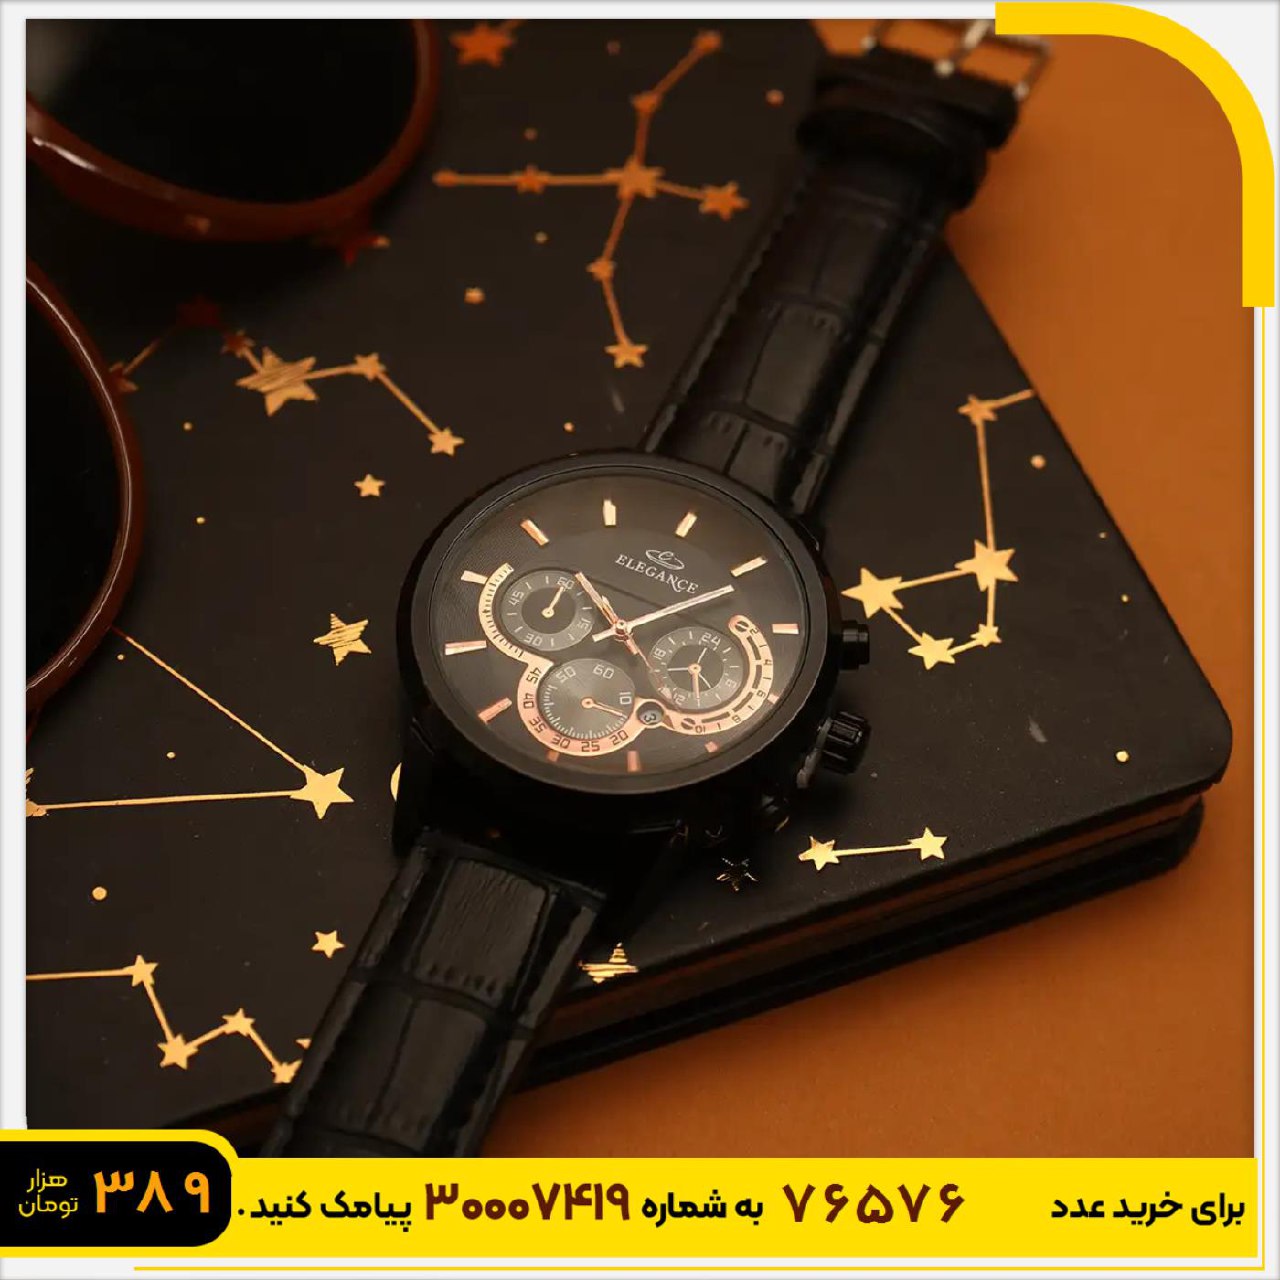 ساعت الگانس تقویم دار صفحه مشکی بند چرم مشکی مدل b62